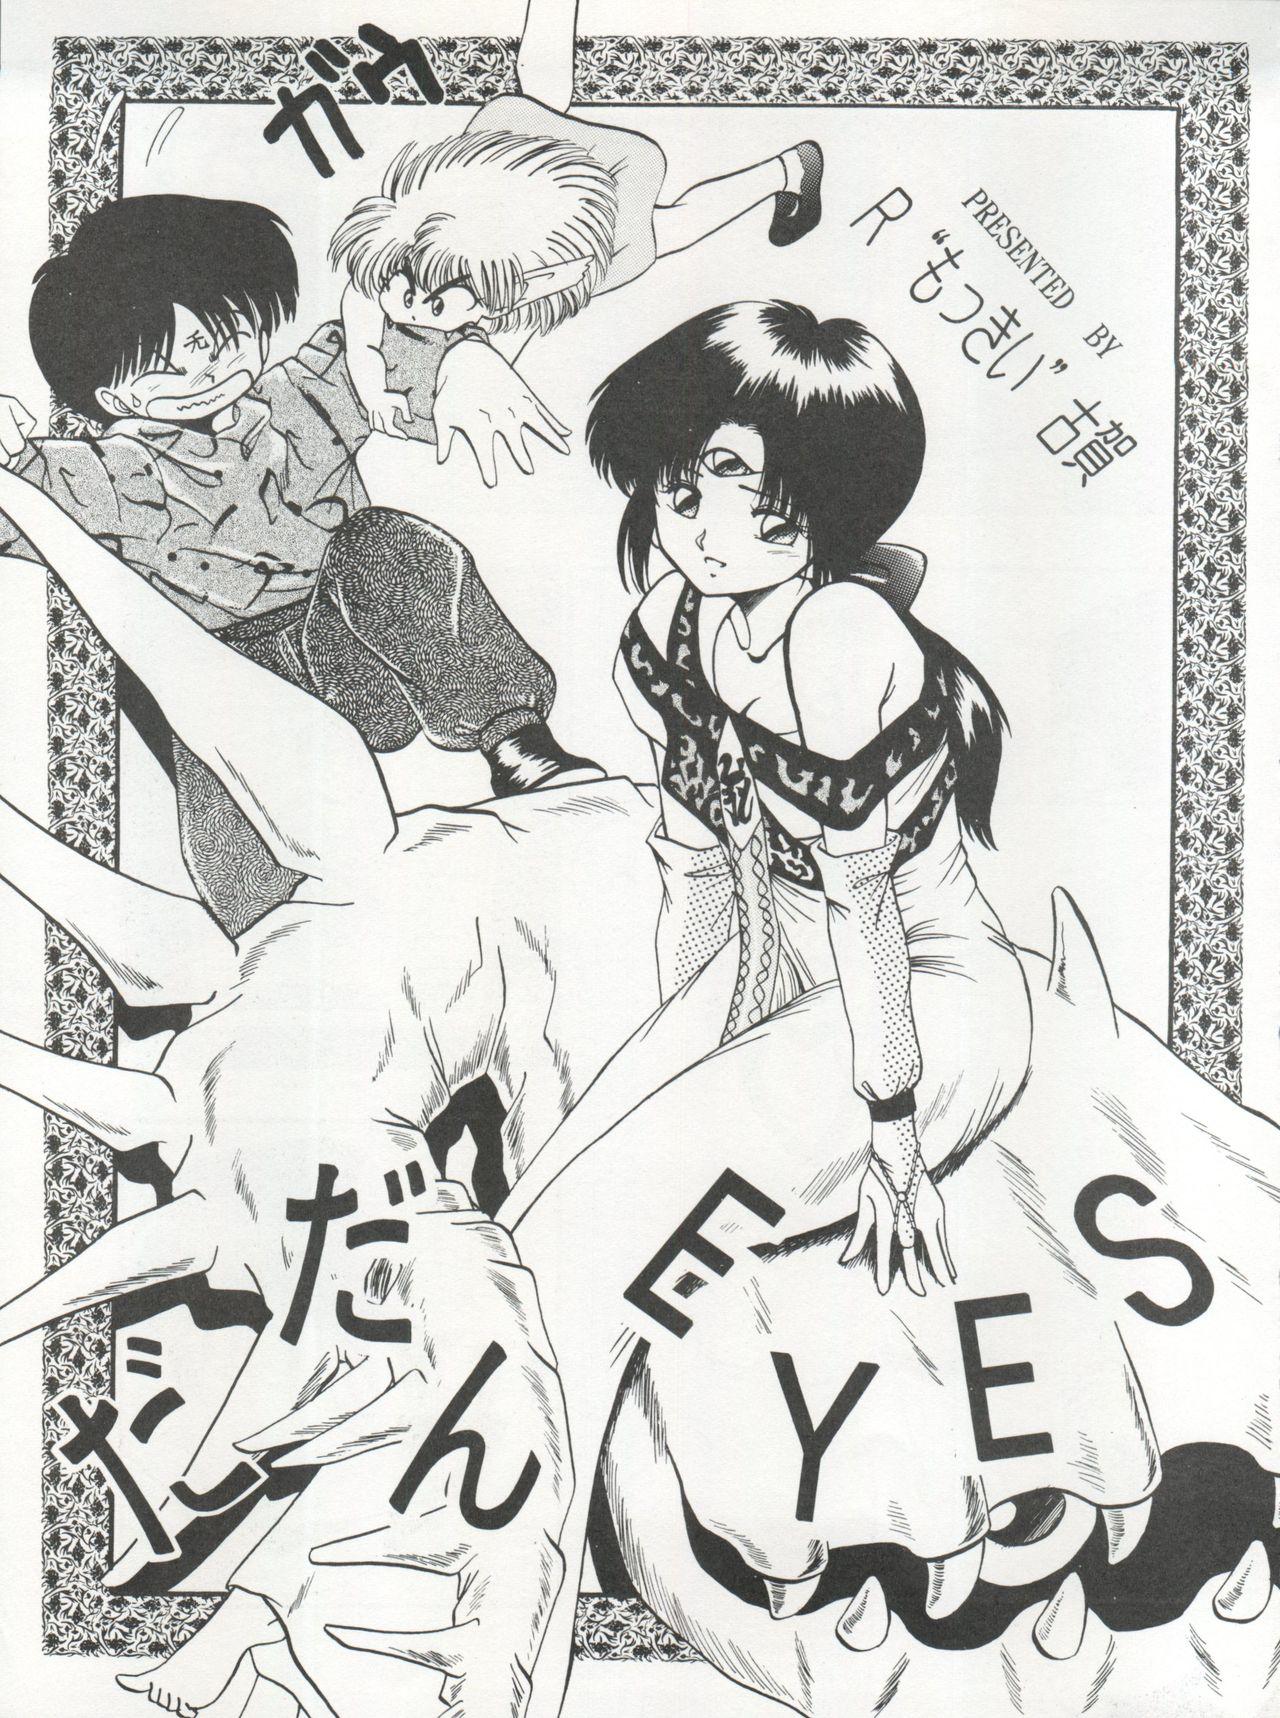 College 逮捕されちゃうぞ - Fushigi no umi no nadia Youre under arrest Minky momo 3x3 eyes Crazy - Page 11